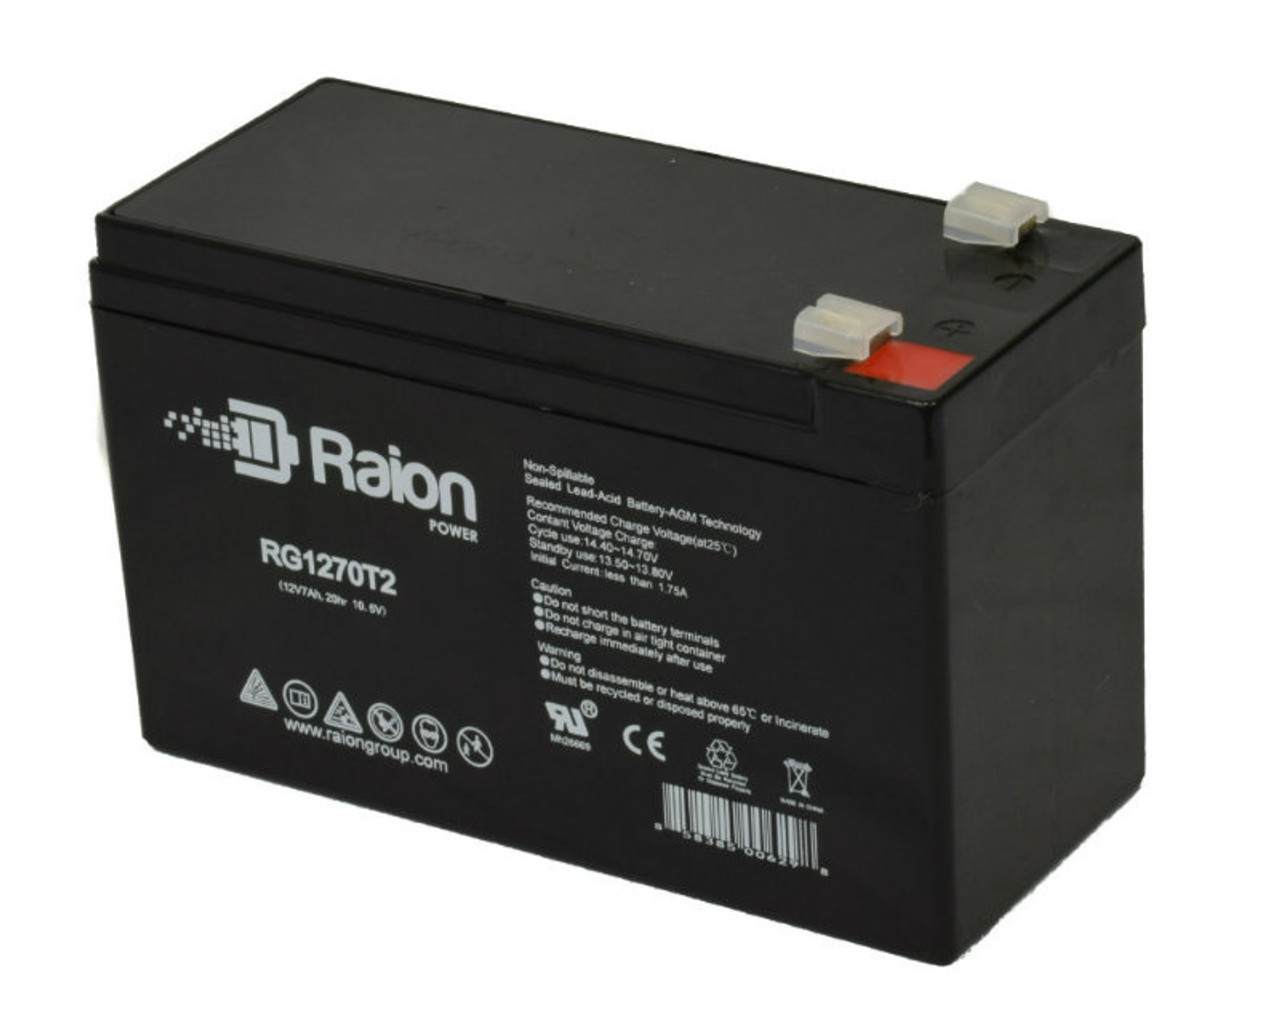 Raion Power RG1270T2 12V 7Ah Lead Acid Battery for Razor Dirt Quad 500